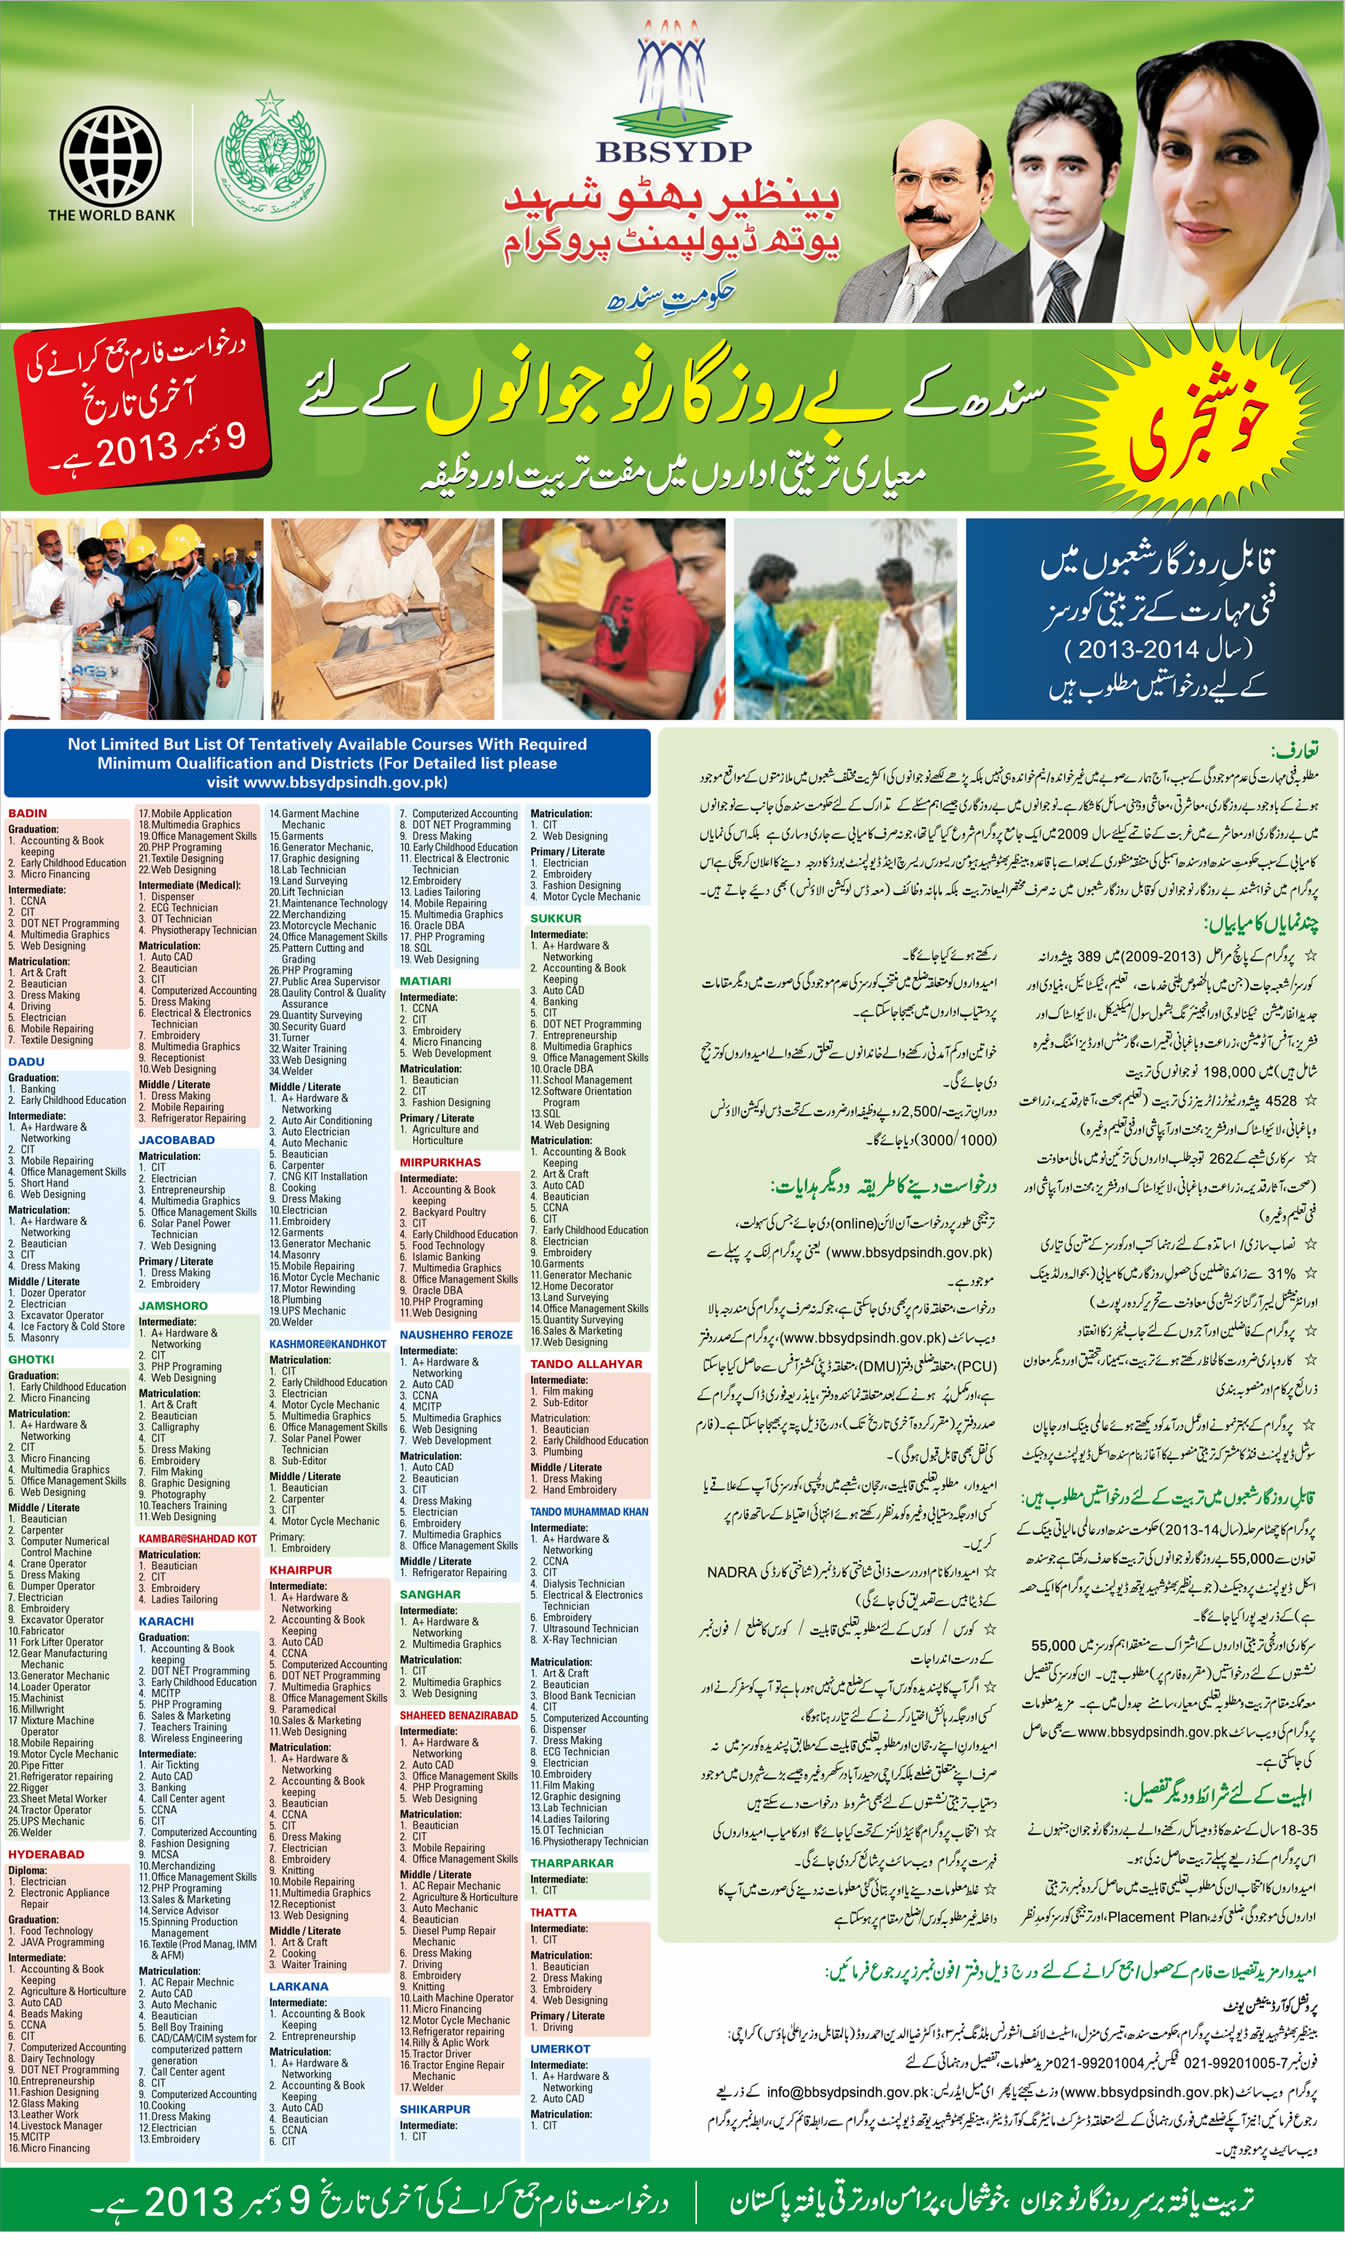 BBSYDP Training 2013 - 2014 Application Form Benazir Bhutto Shaheed Youth Development Program Sindh